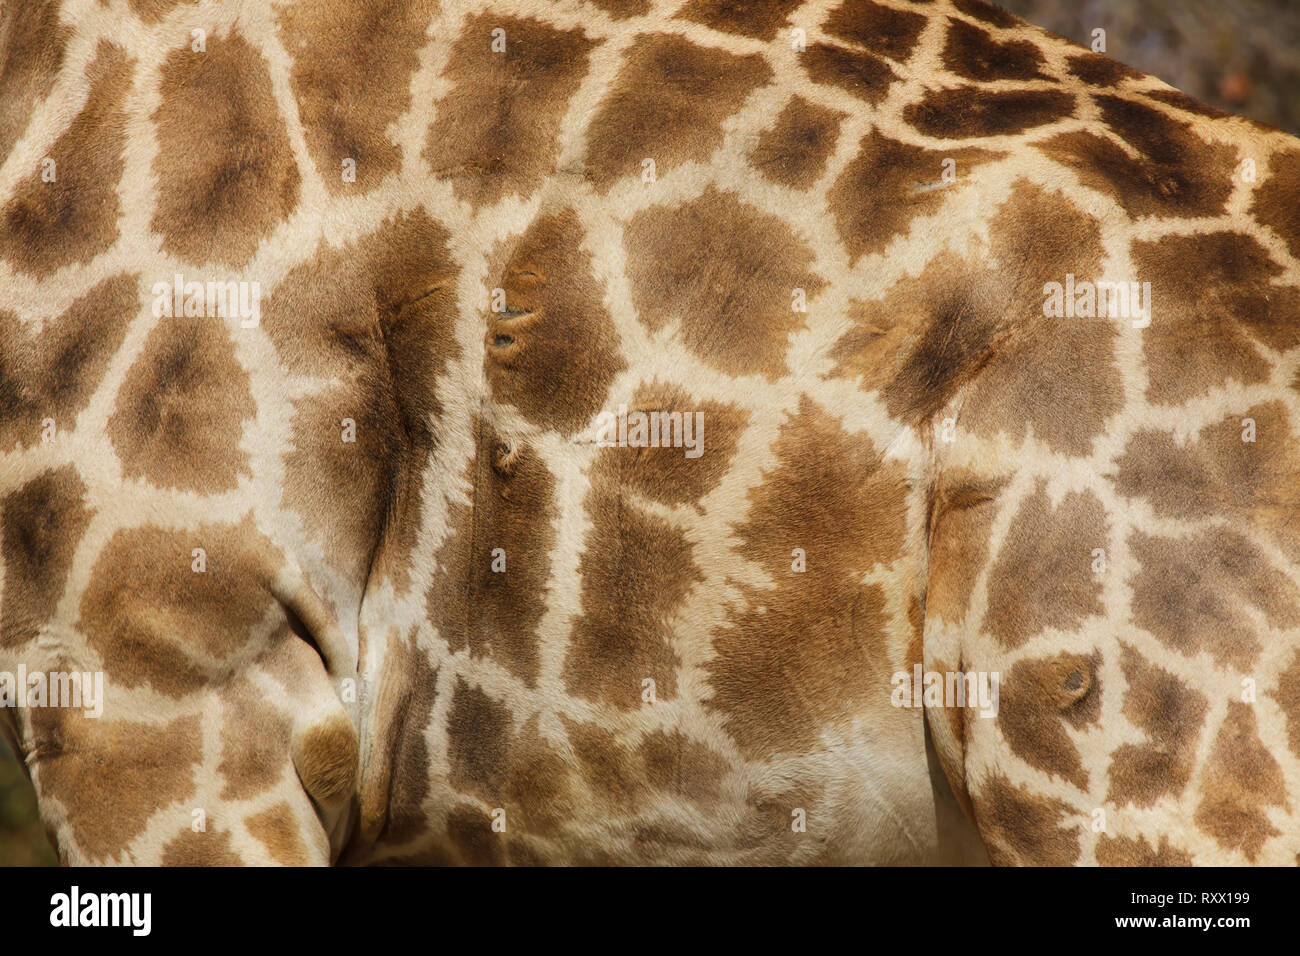 Angolan giraffe (Giraffa camelopardalis angolensis), also known as Namibian giraffe. Skin texture. Stock Photo